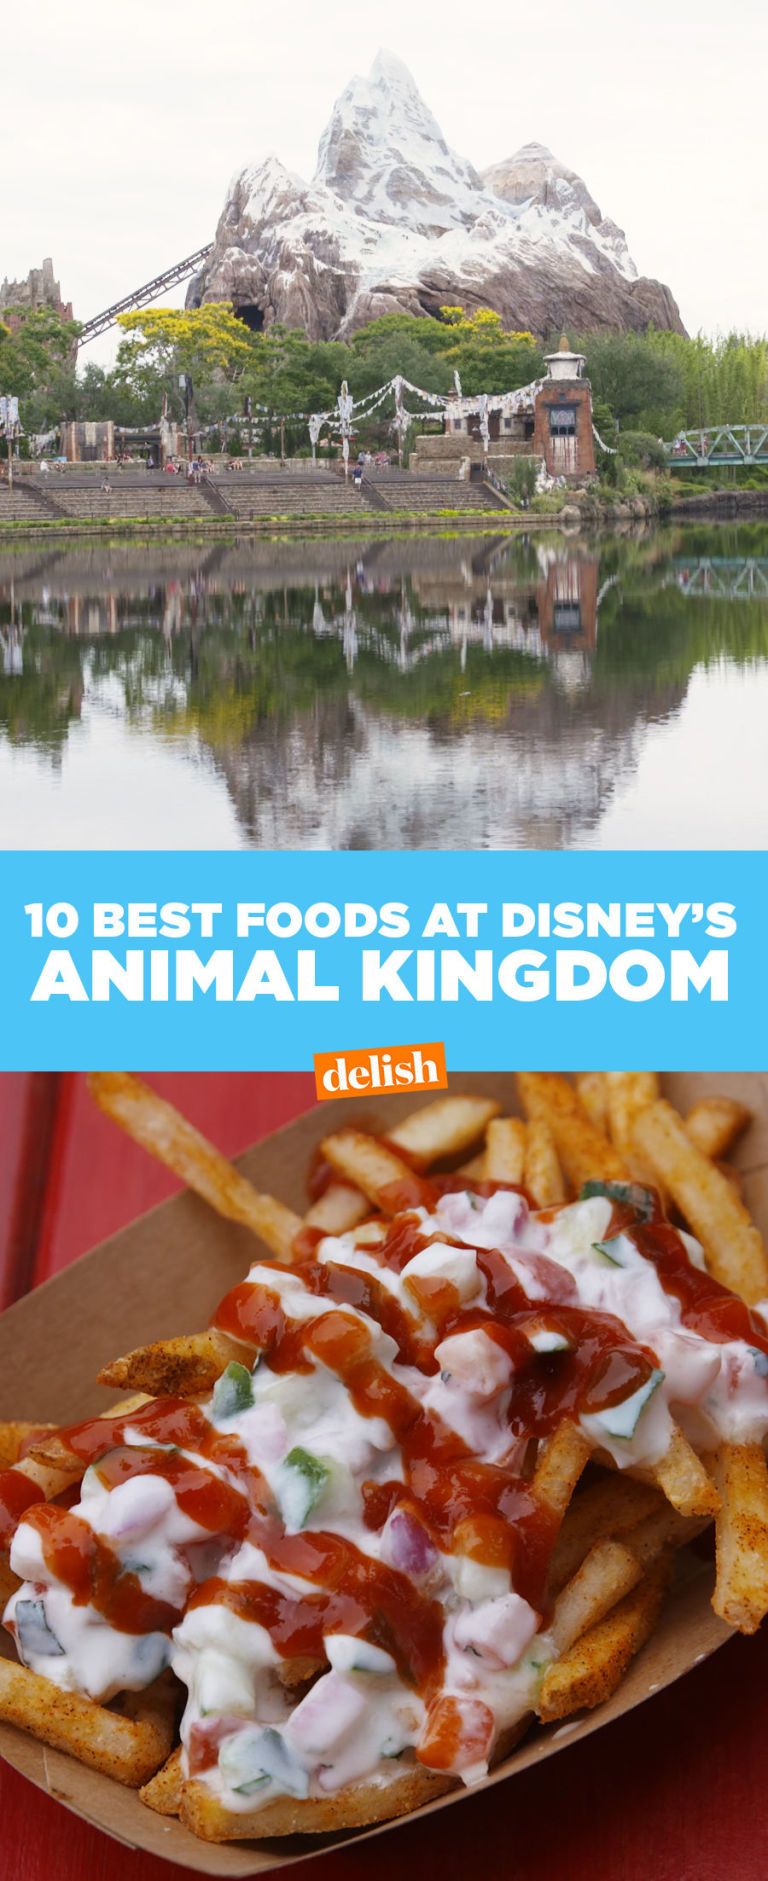 The 15 Most Delish Foods At Disney’s Animal Kingdom